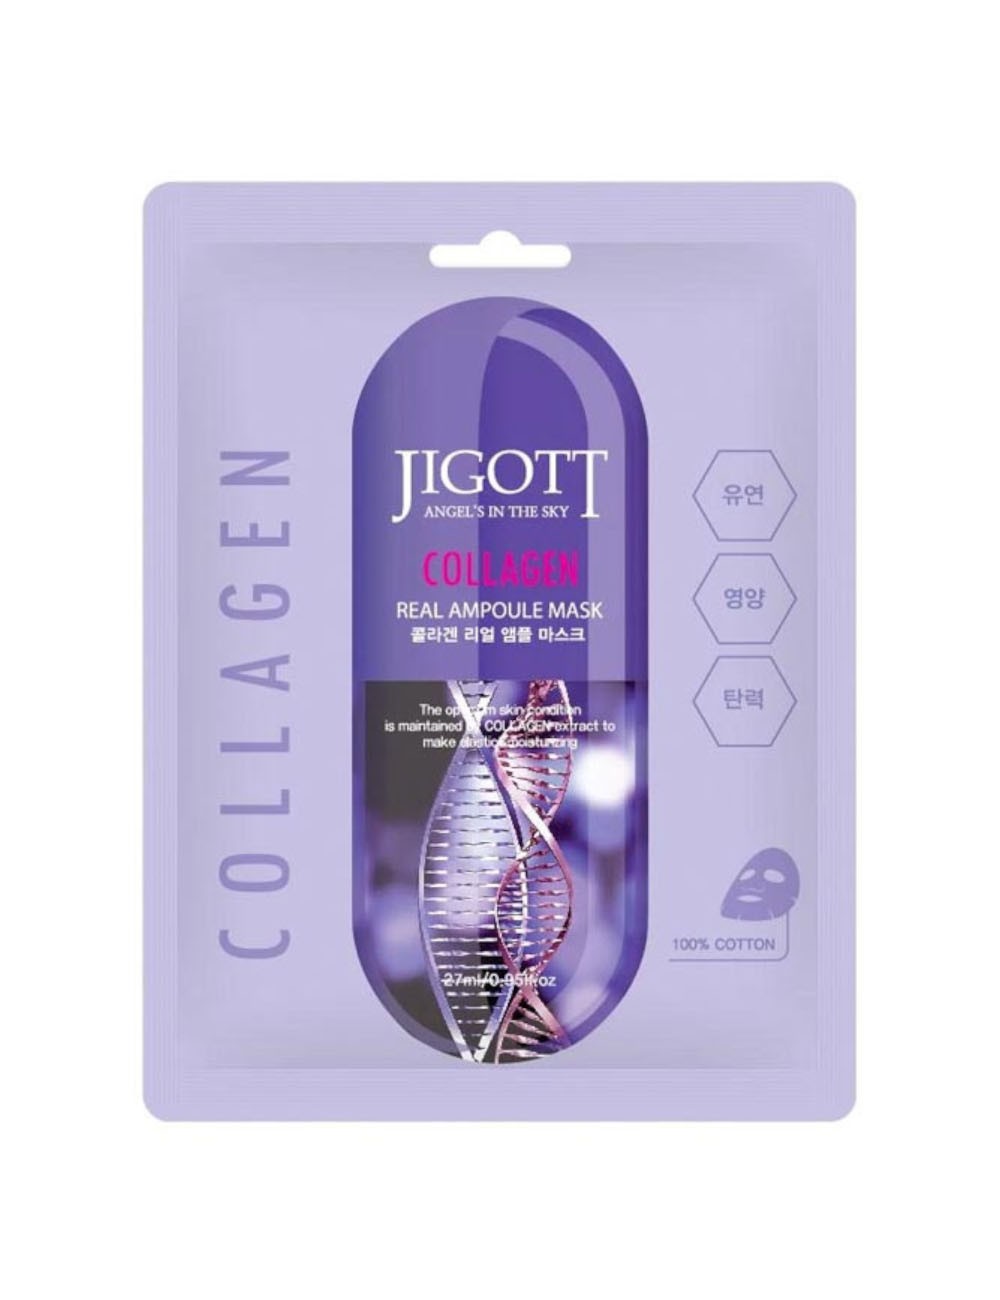 JIGOTT Collagen Real Ampoule Mask